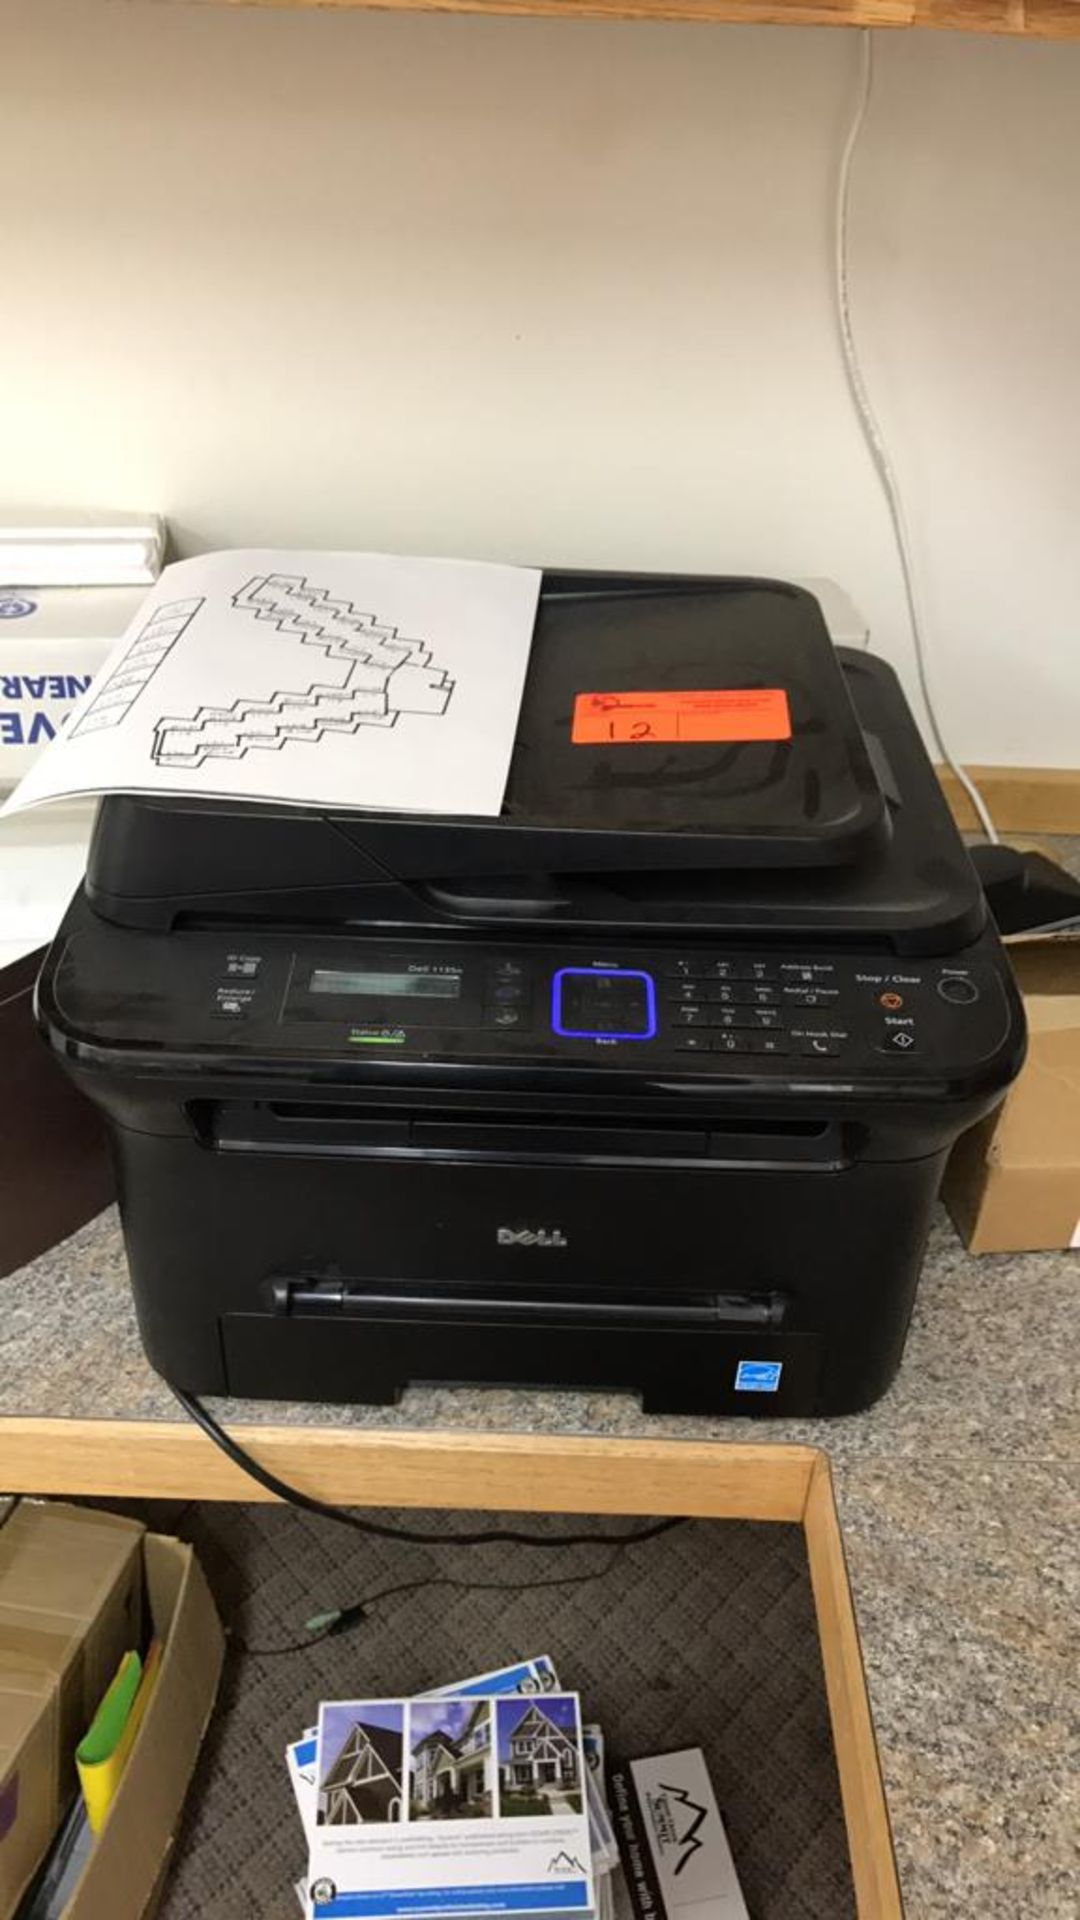 Dell copy, print, scanner, Model: 1135n Works